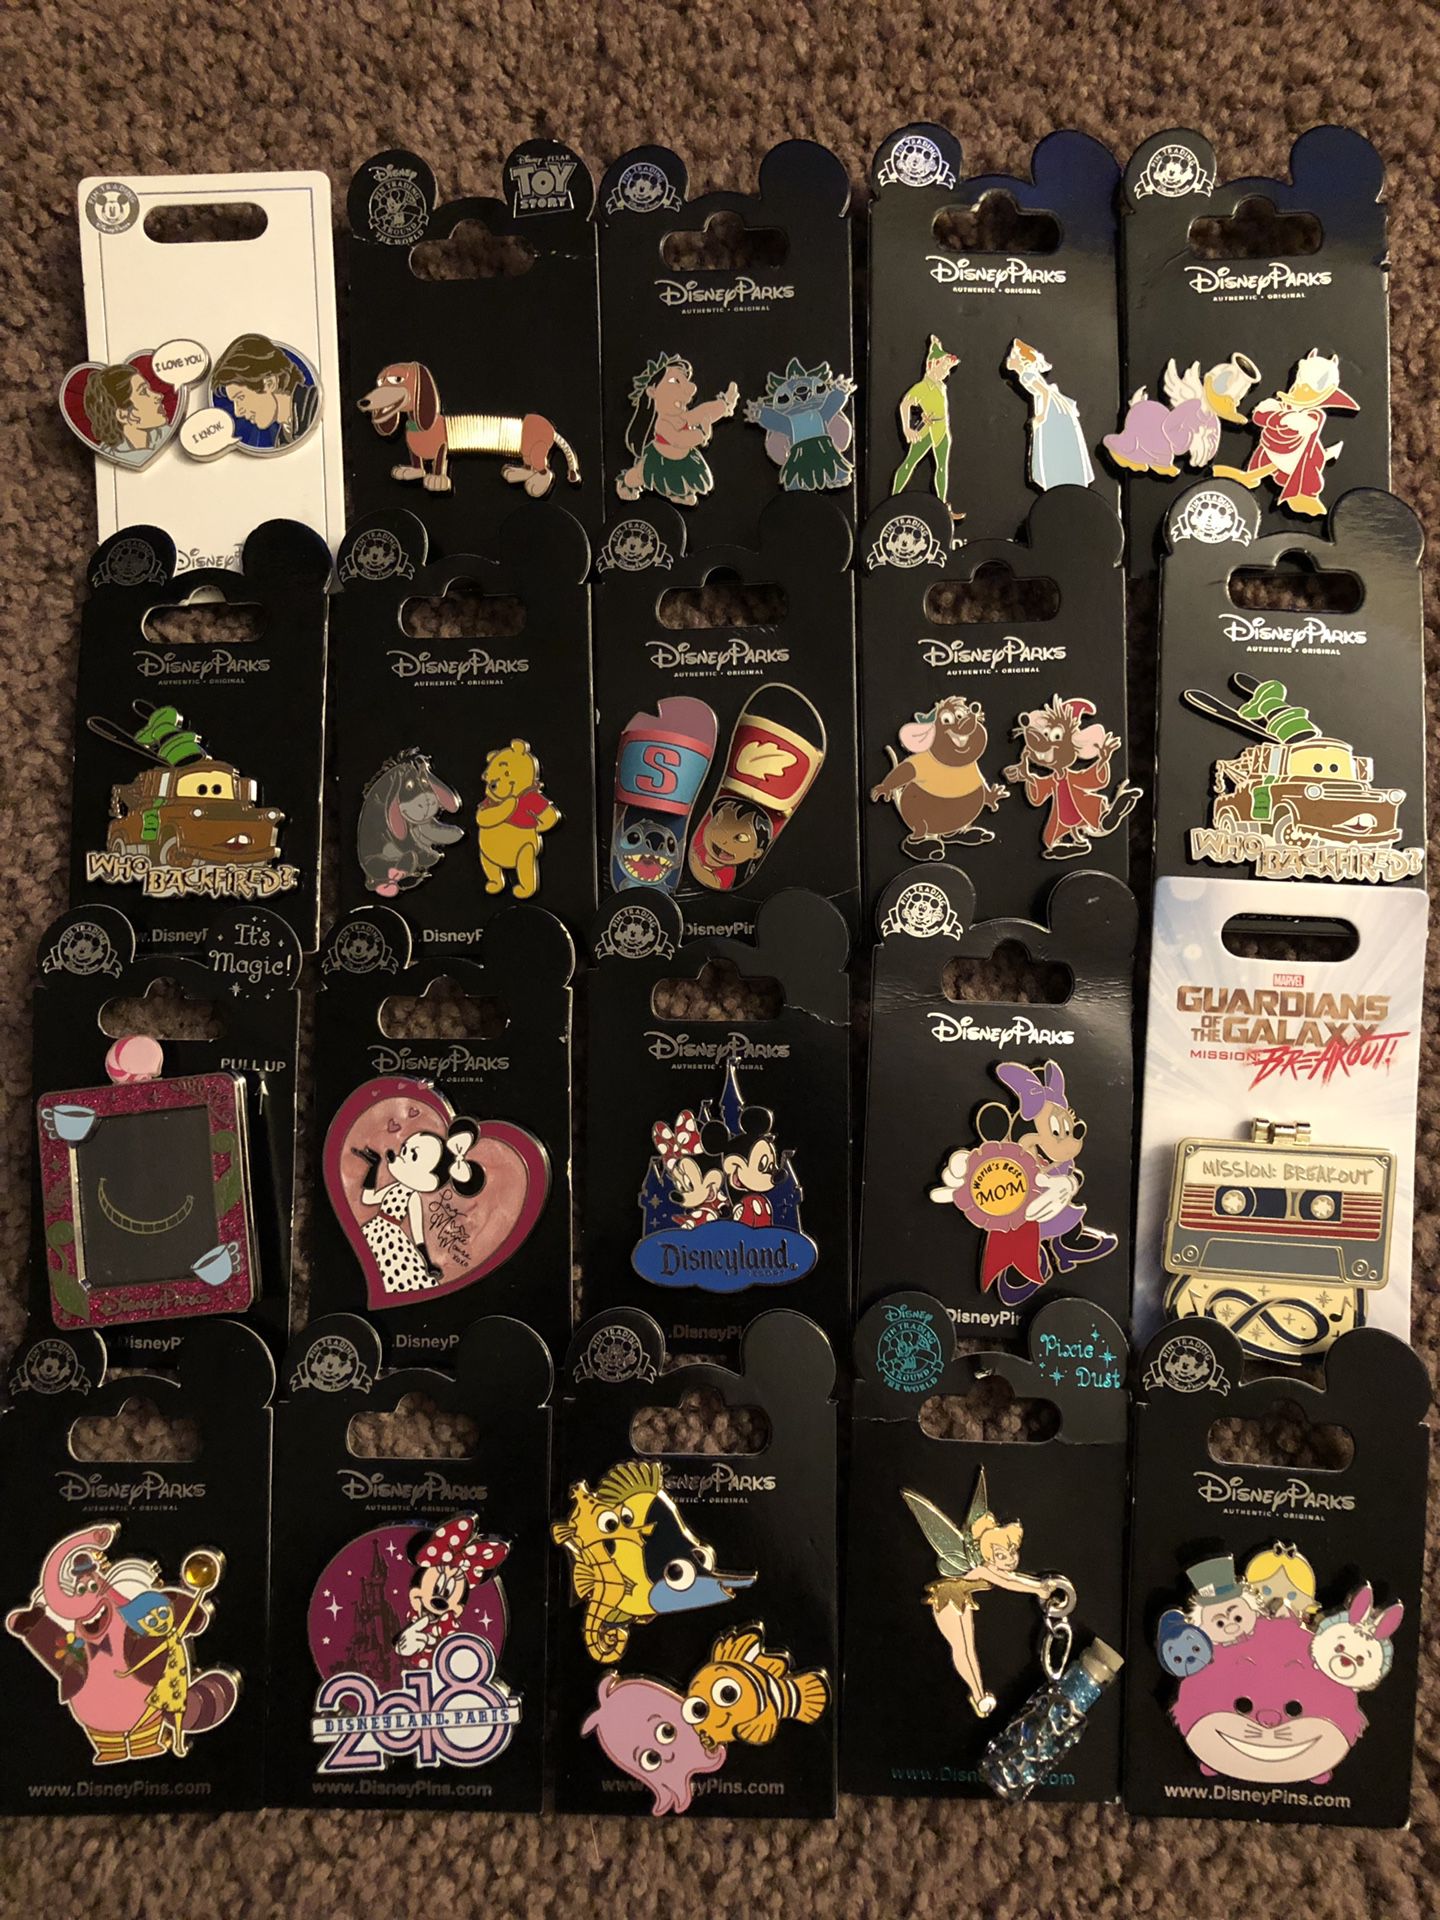 Authentic Disneyland Disney pins!!! All original. $12 EACH